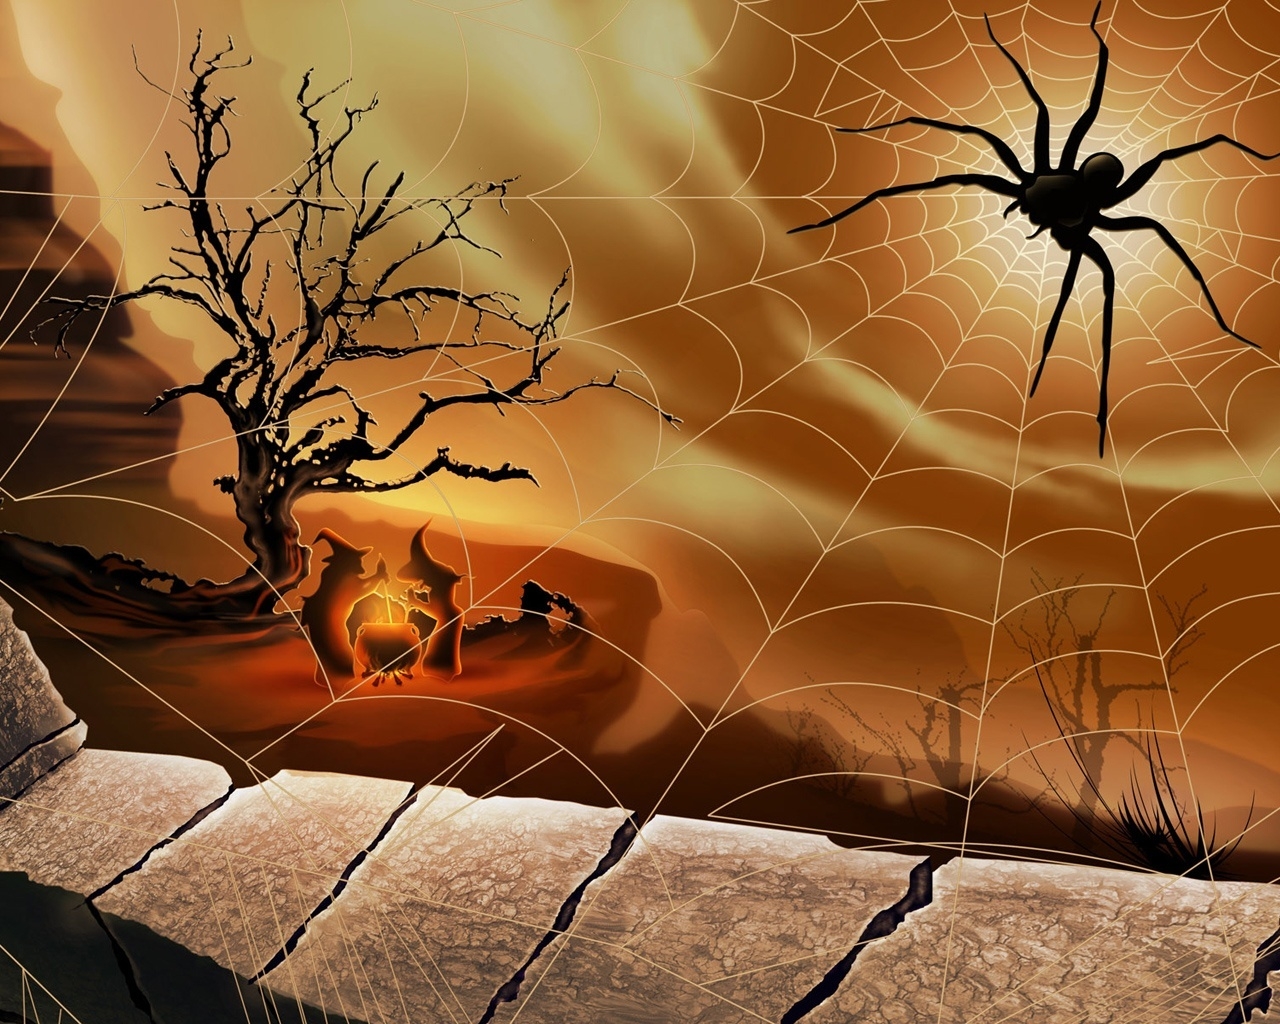 Halloween Spider for 1280 x 1024 resolution